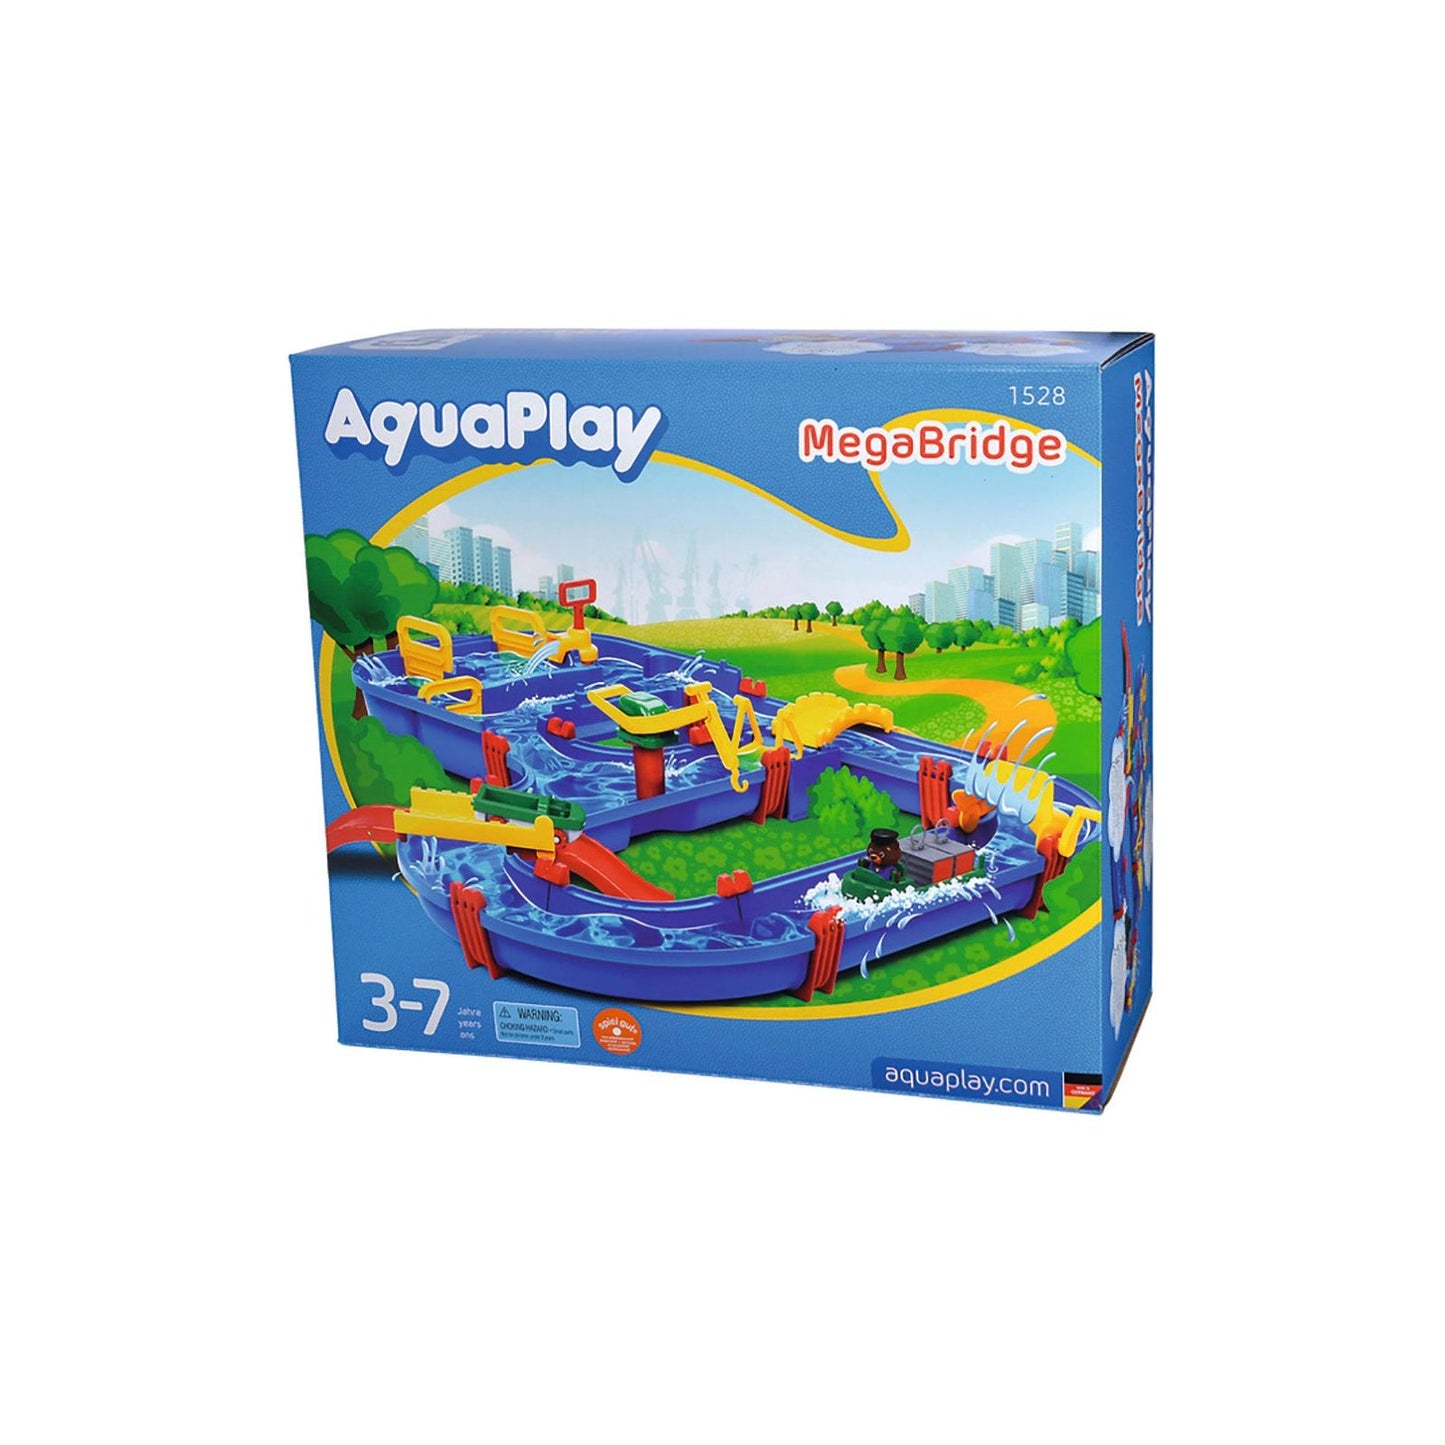 AquaPlay Megabridge